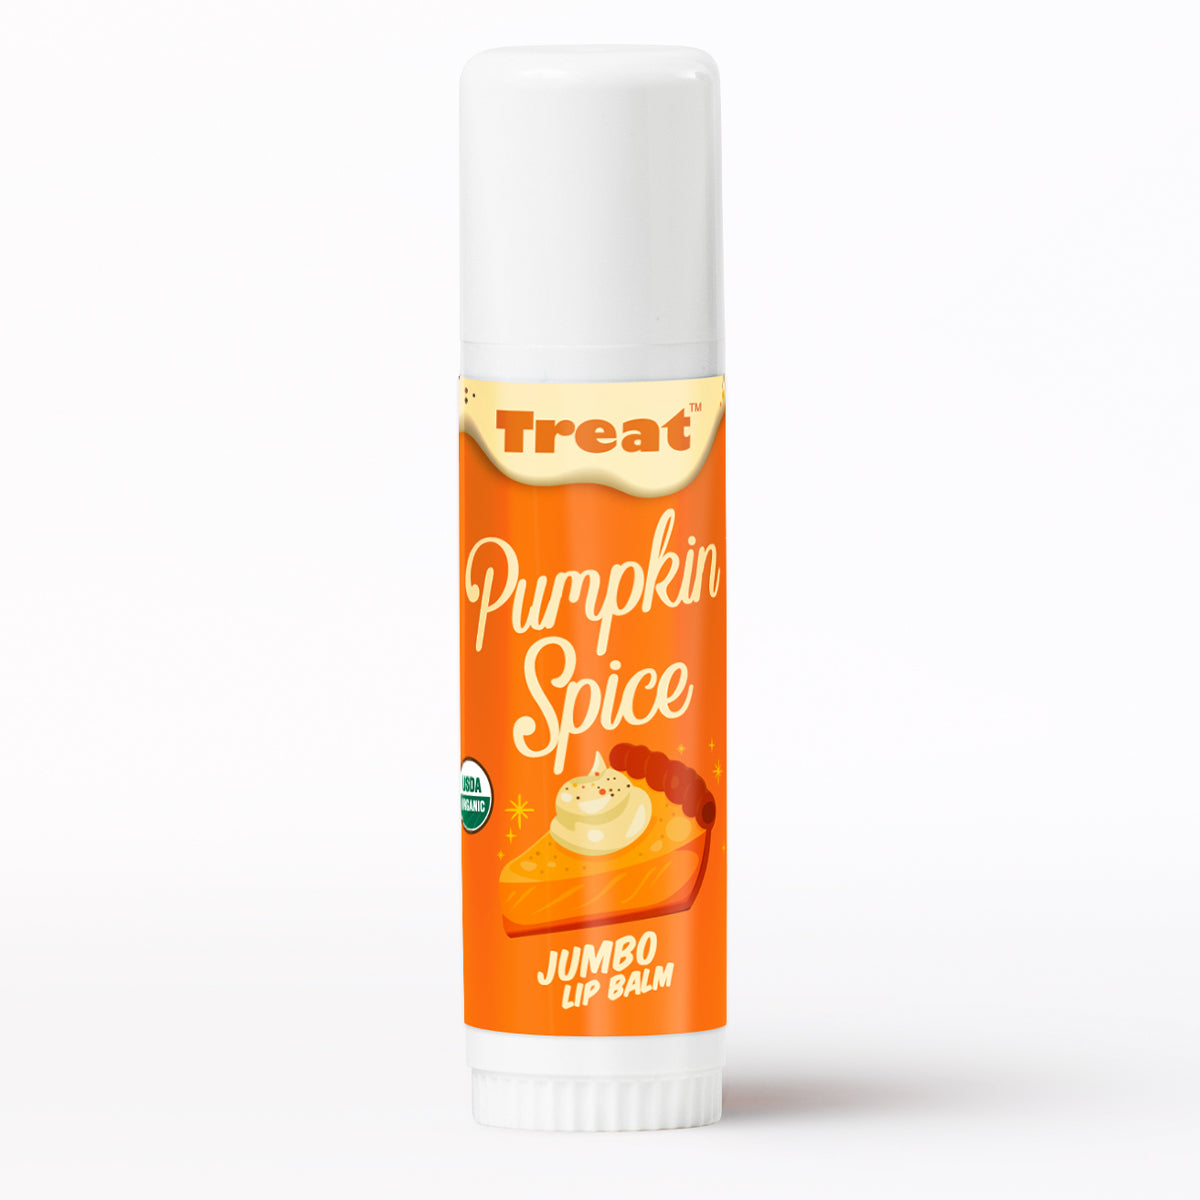 Limited Edition Pumpkin Spice Jumbo Organic Lip Balm